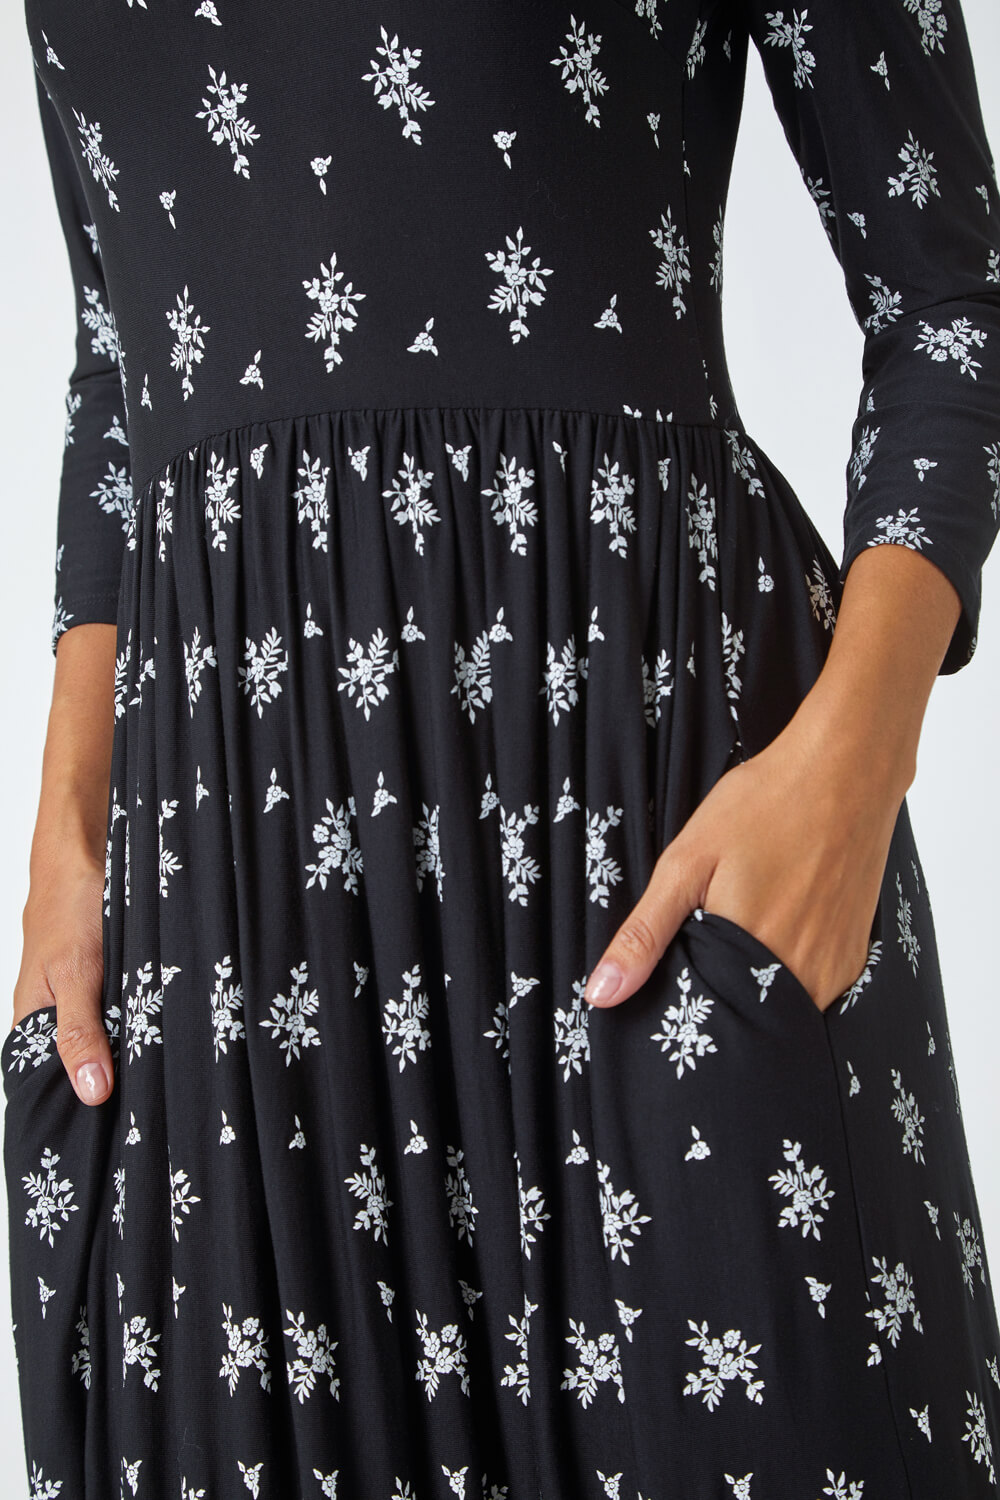 Black Floral Border Print Maxi Stretch Dress, Image 5 of 5